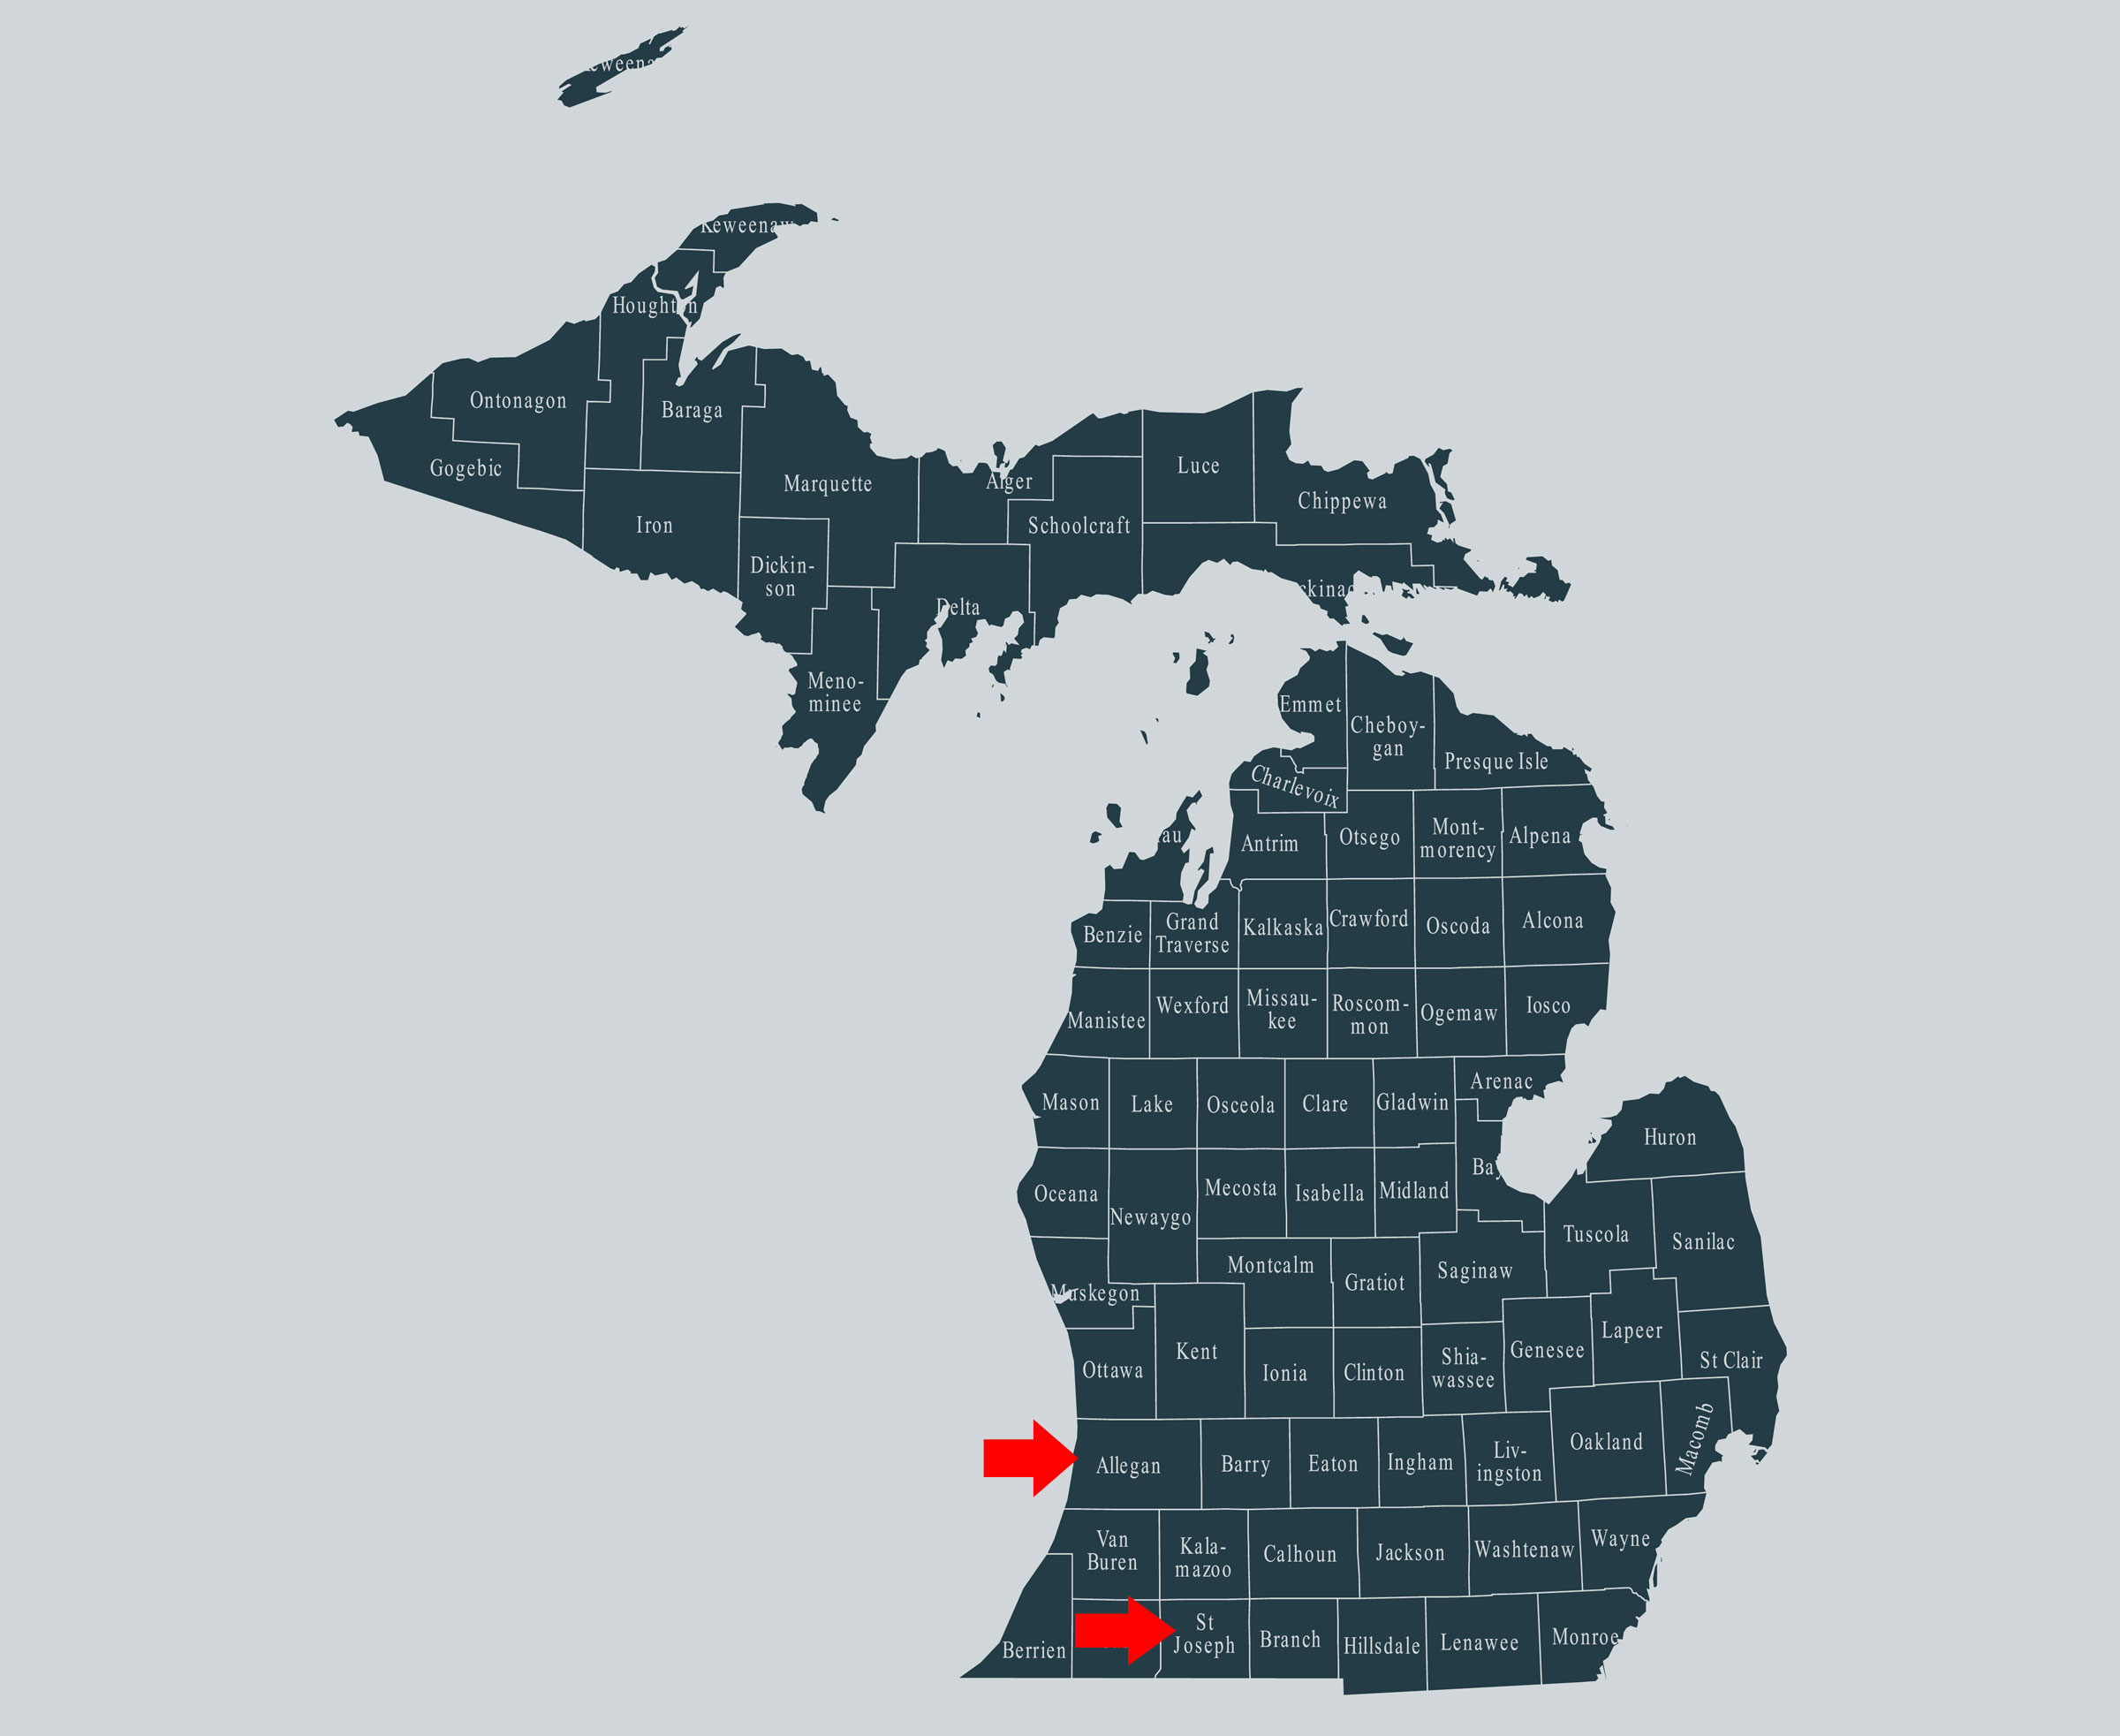 Michigan St Joseph and Allegan Counties map